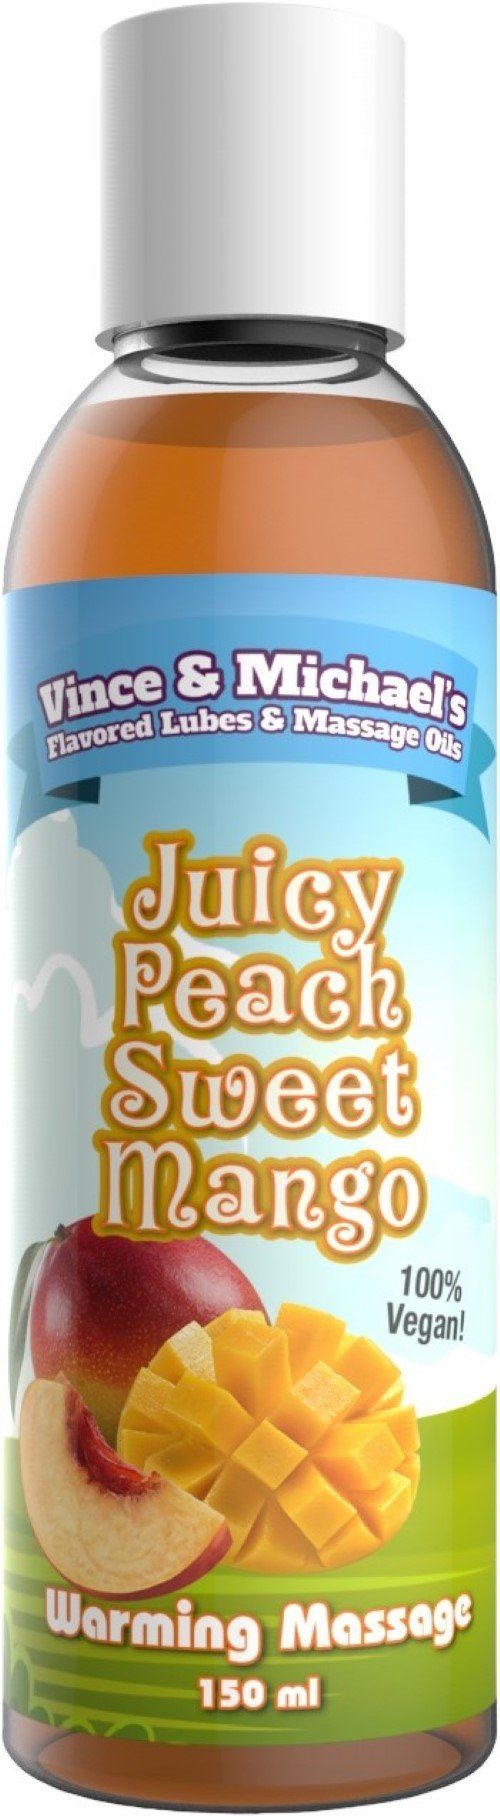 Sweet & Vince Gleitgel ml 150 150ml Peach Juicy - Mango & Warming MICHAEL's Michael´s VINCE